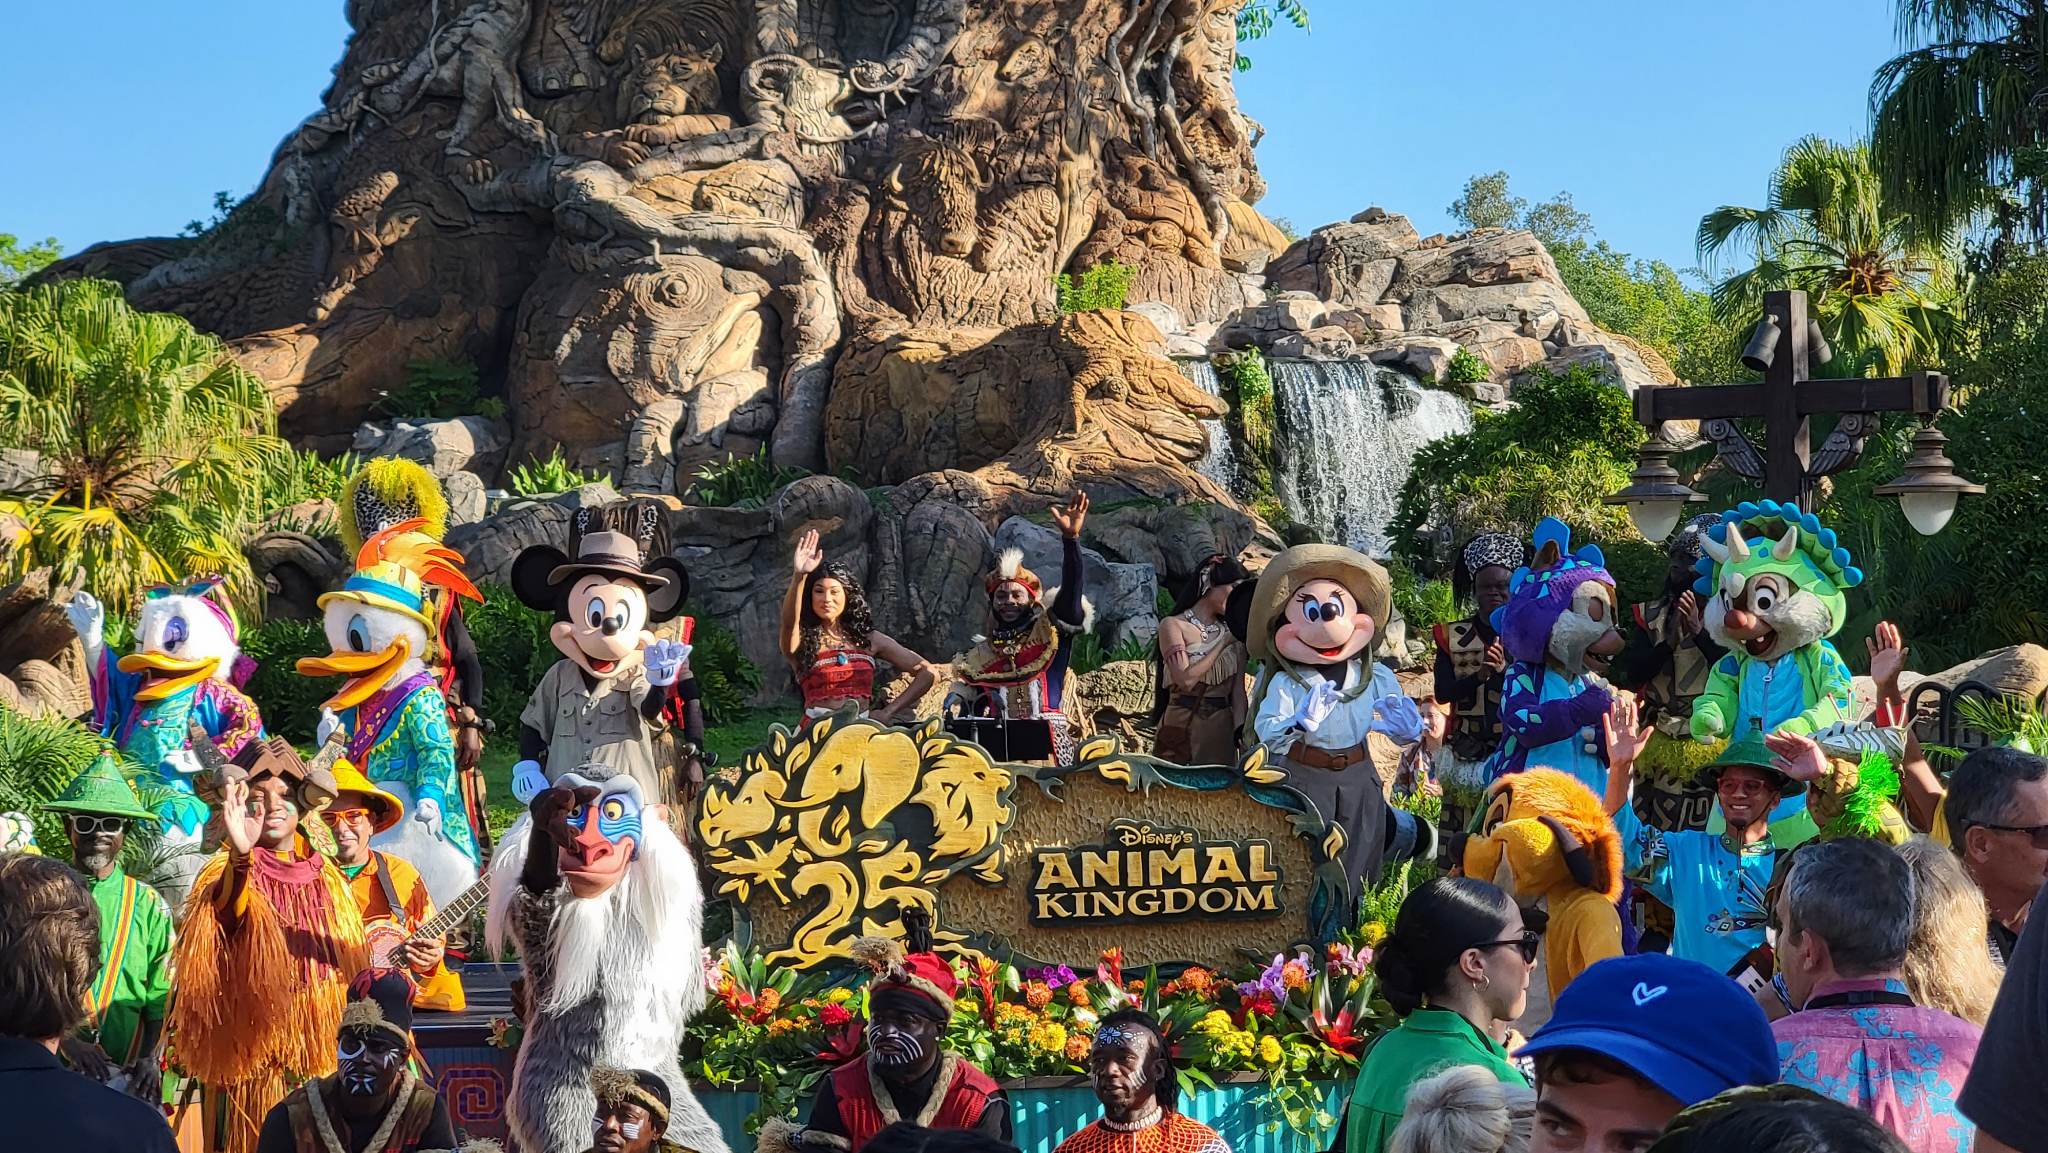 Photos & Video: Disney’s Animal Kingdom 25th Anniversary Celebration